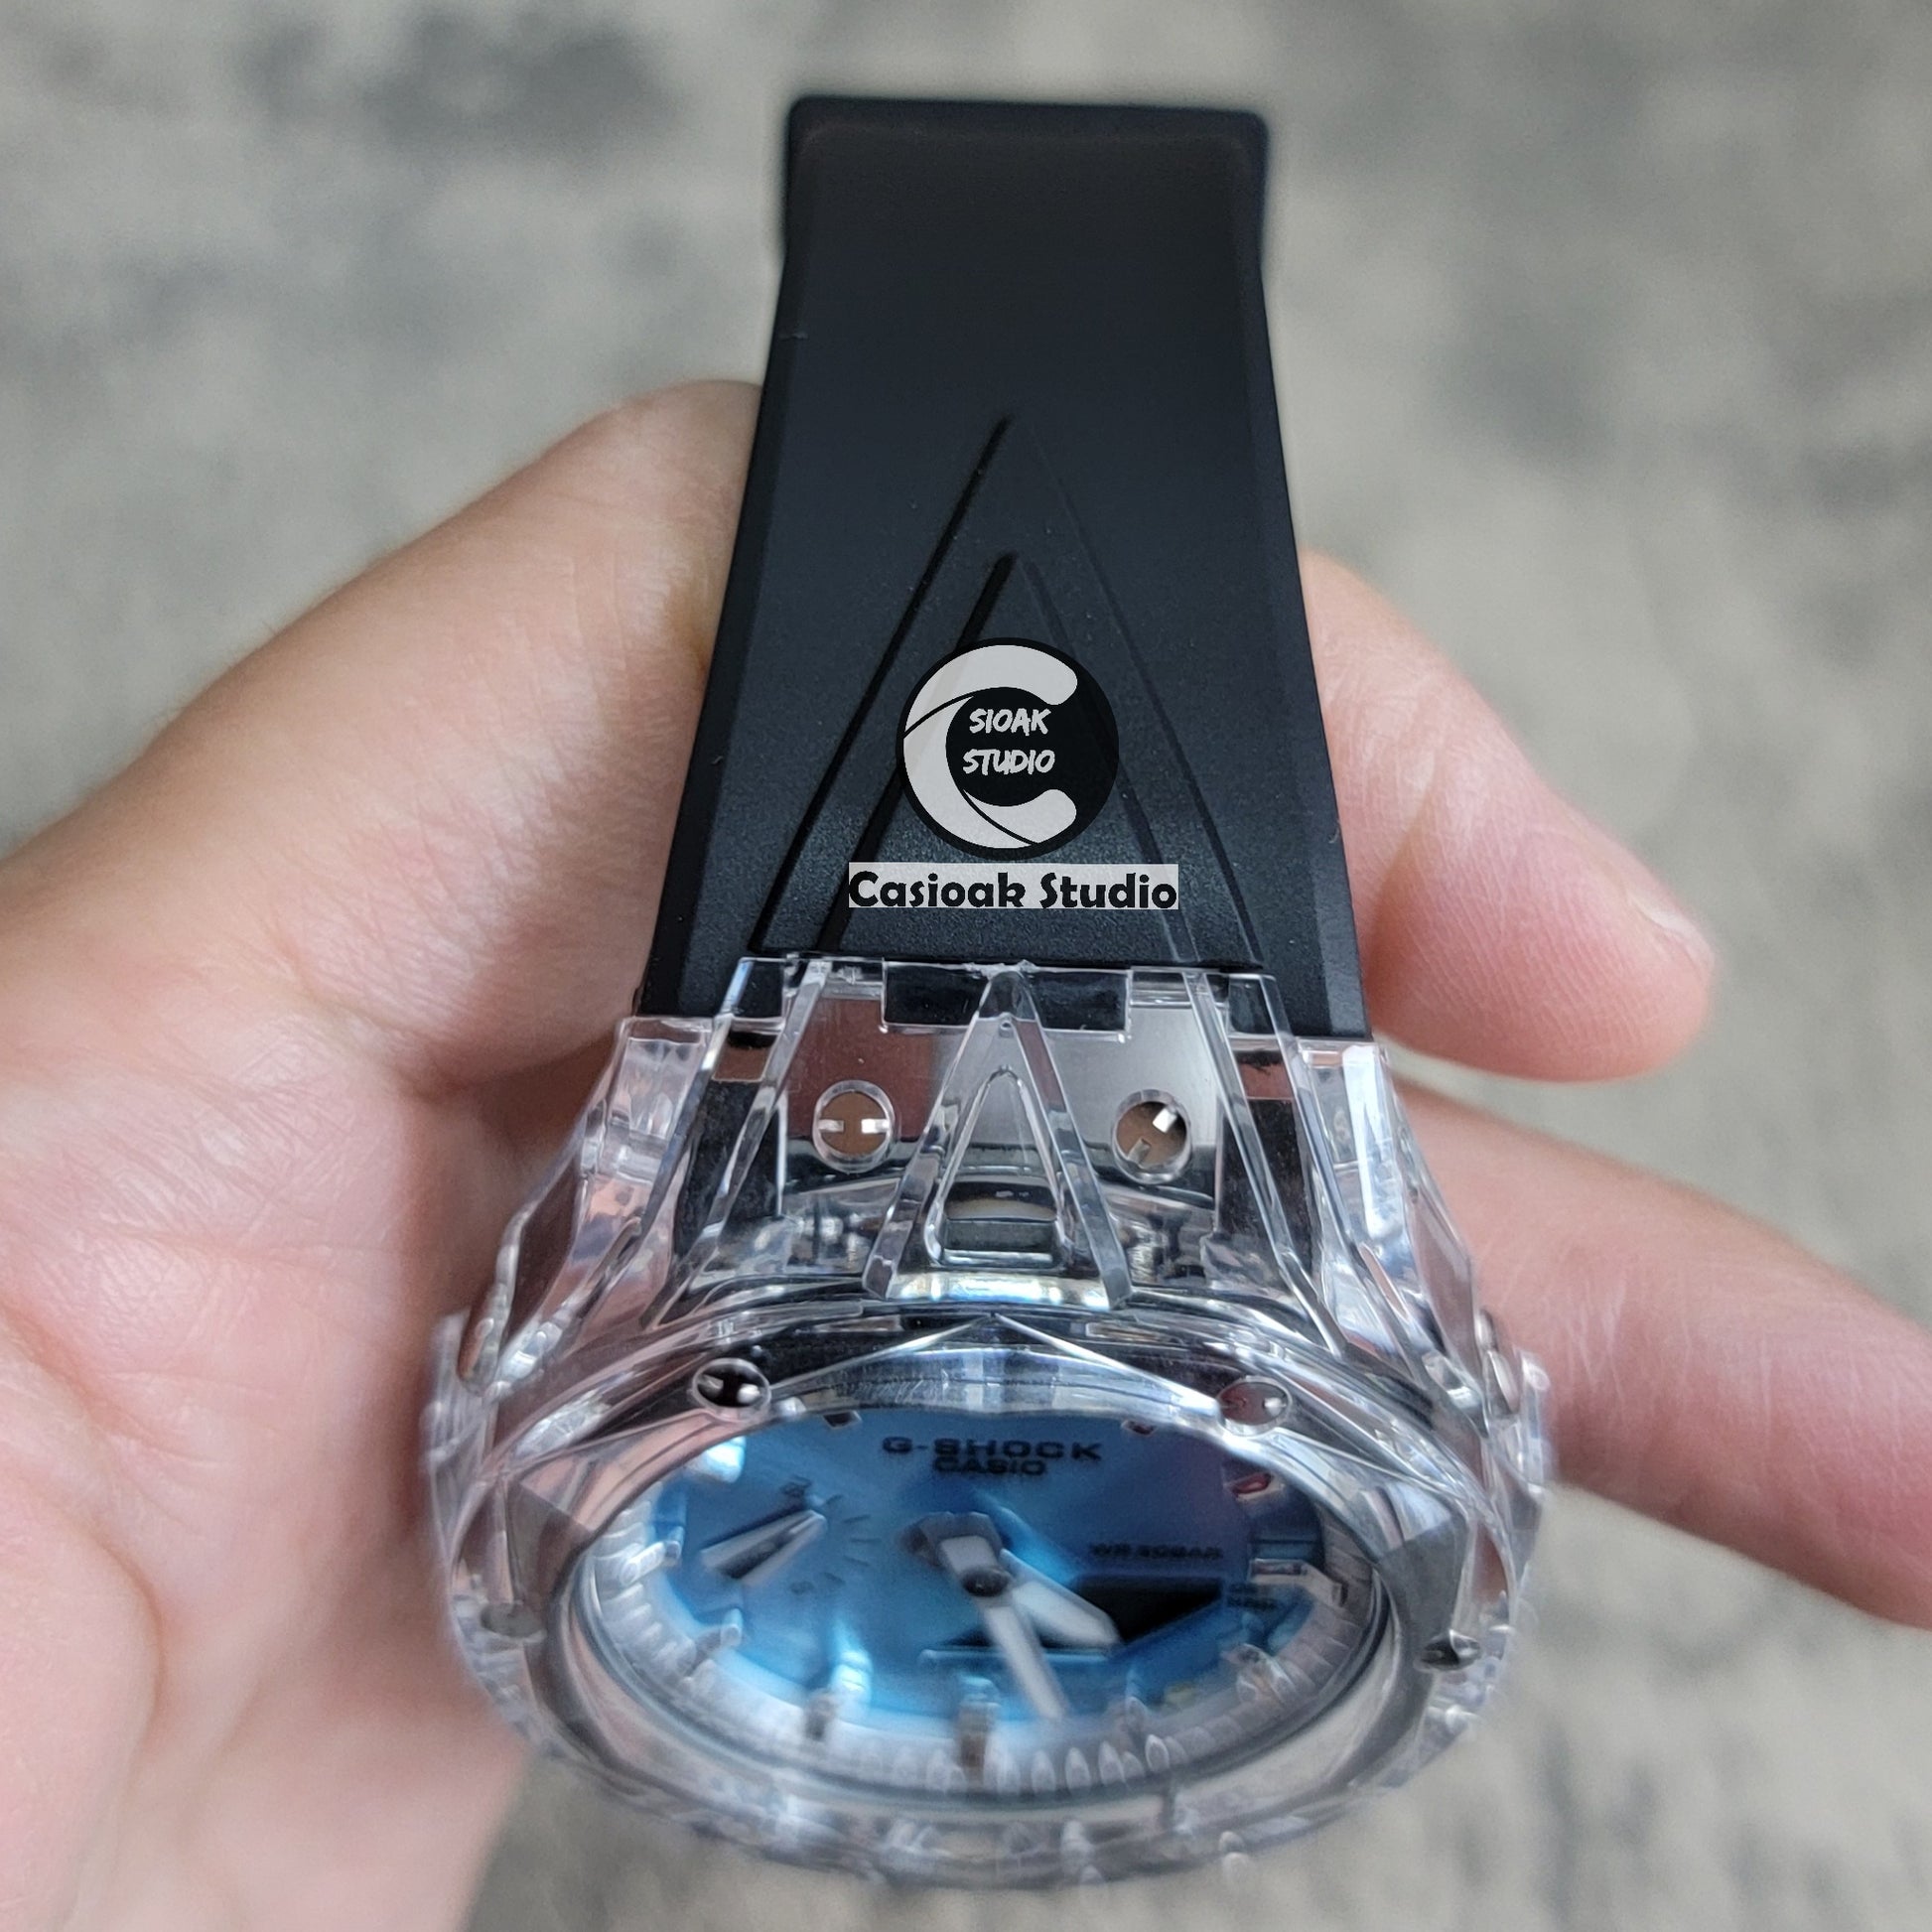 Casioak Mod Watch Transparent Case Black Strap Silverw Time Mark Blue Dial 44mm - Casioak Studio